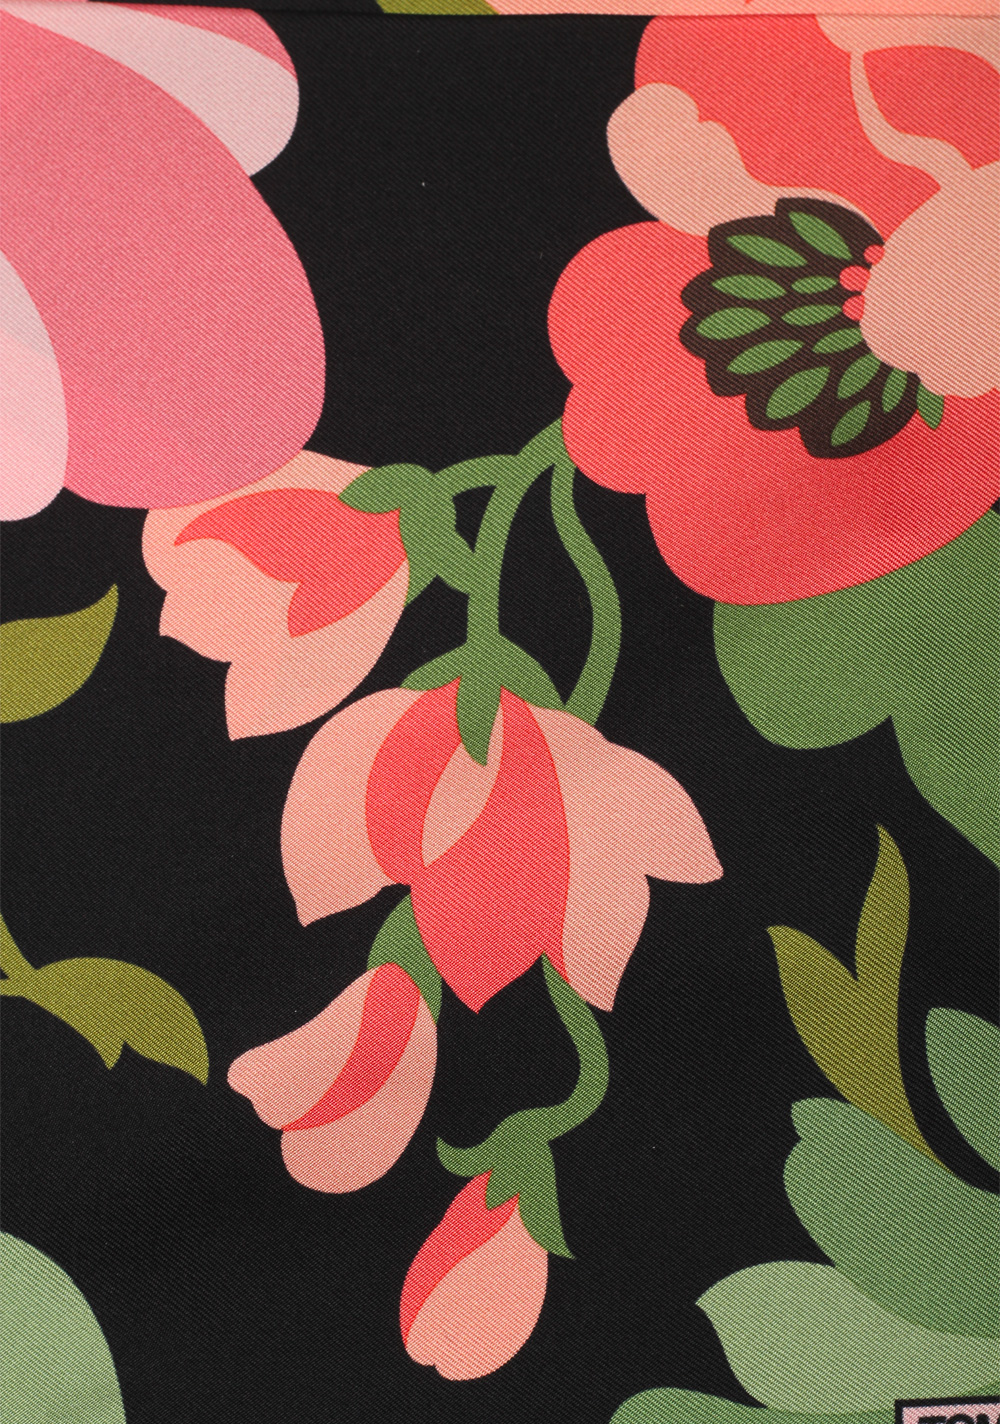 Tom Ford Black Green Pink Silk Pocket Square Floral Pattern 16″ x 16″ | Costume Limité